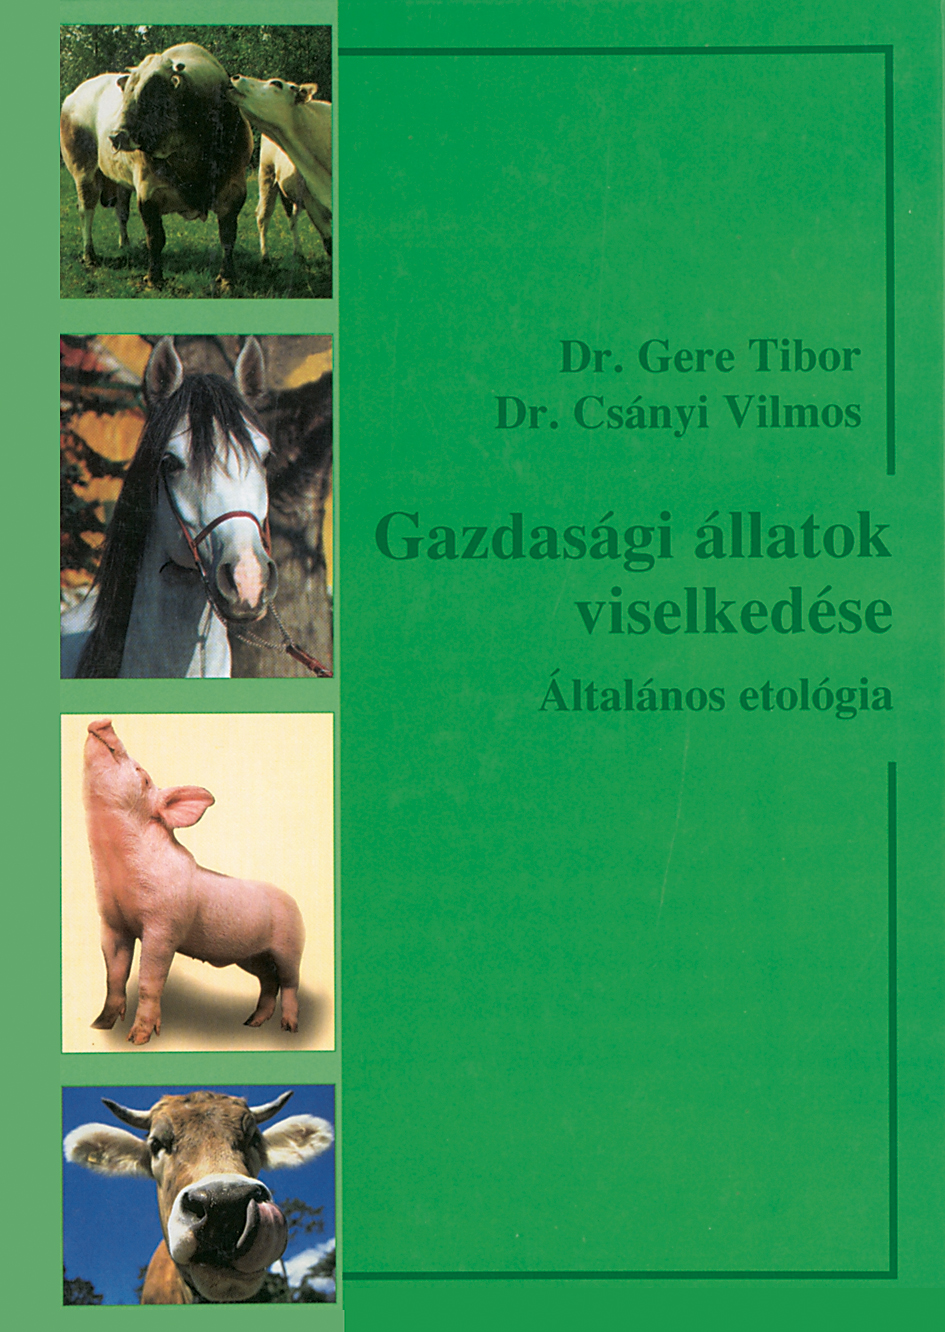 Behaviour of farm animals - General ethology